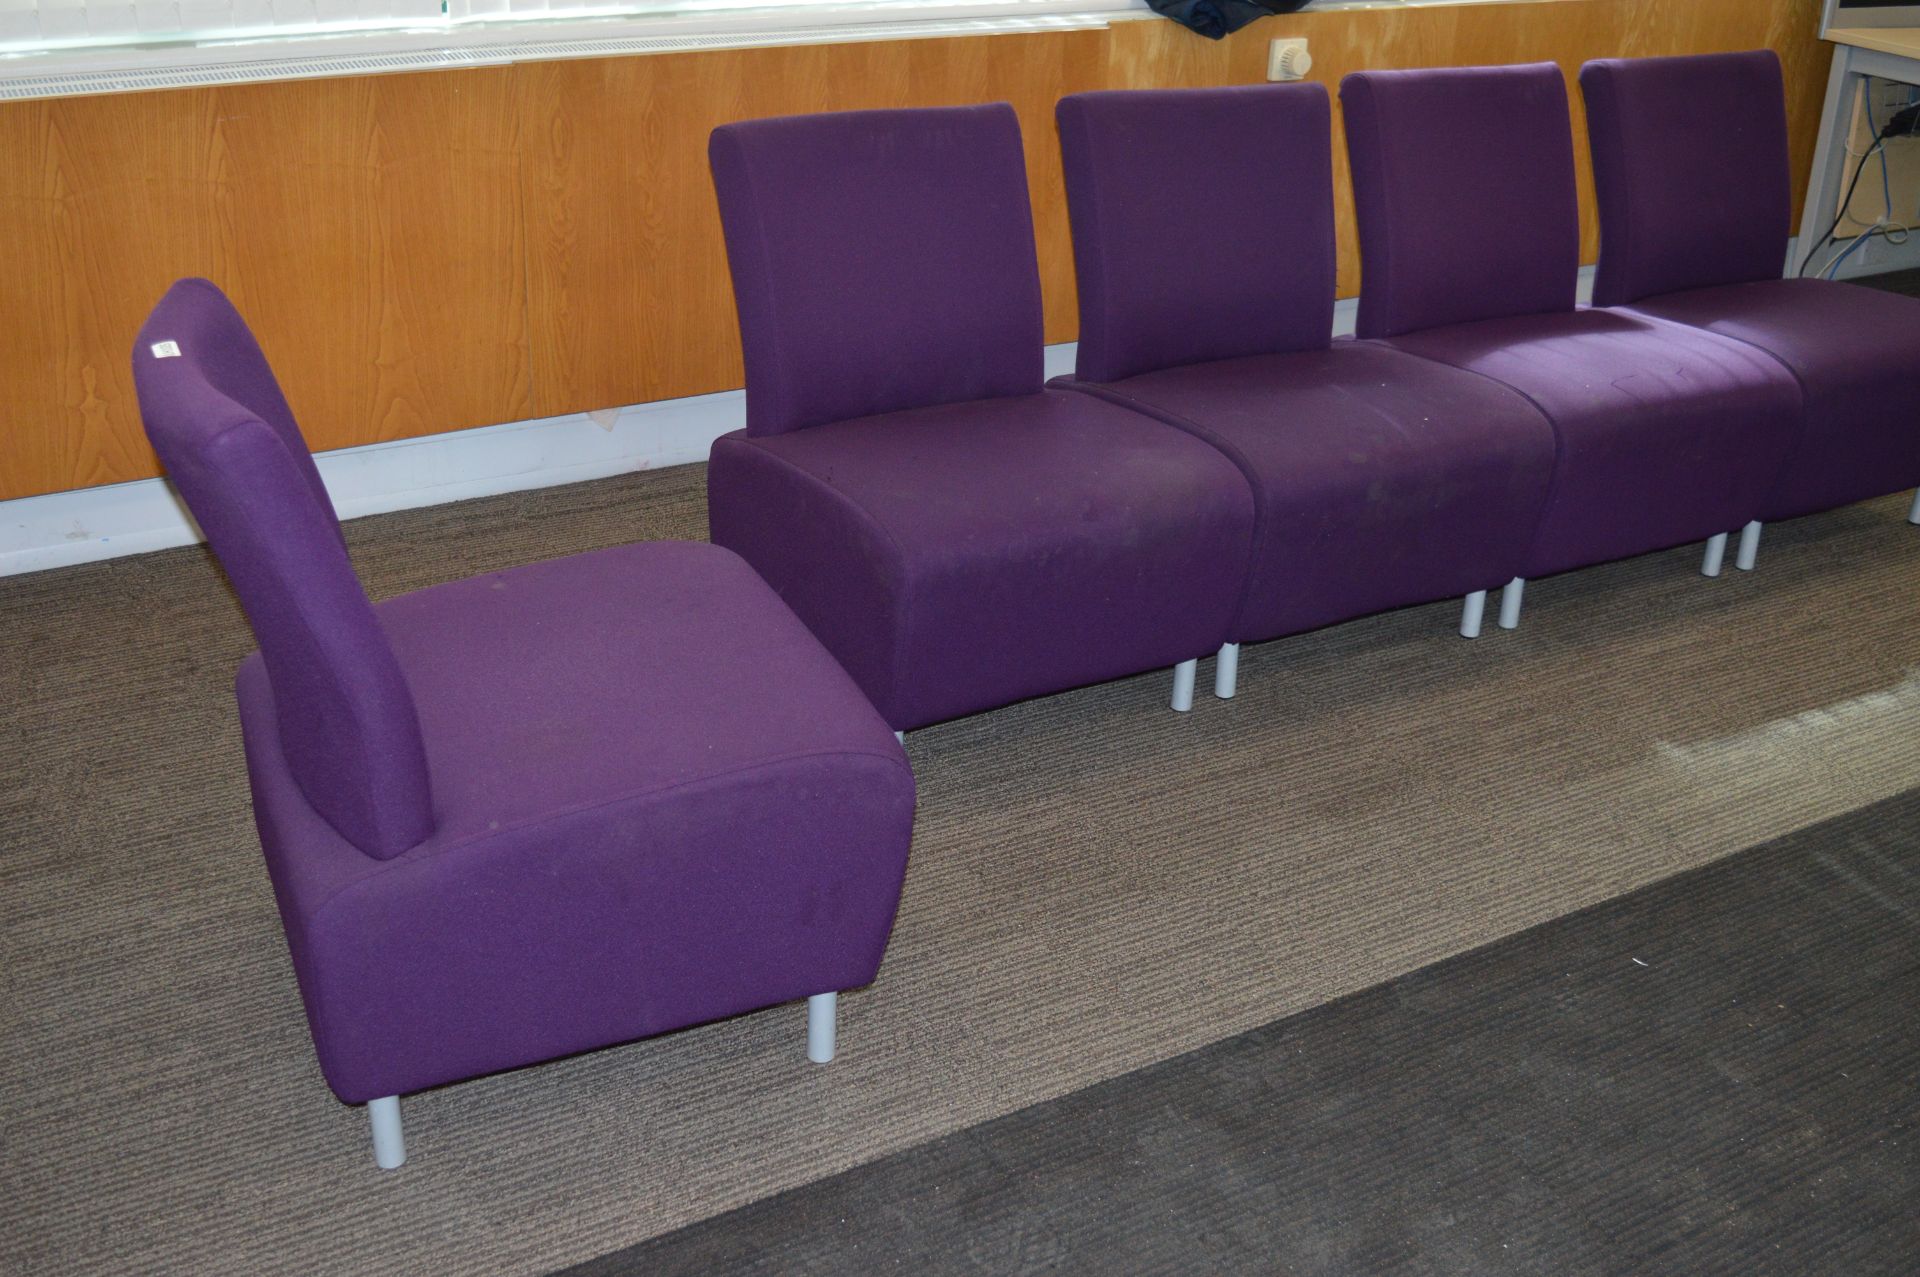 1 x Modular Five Piece Reception Waiting Room Sofa - Image 3 of 3